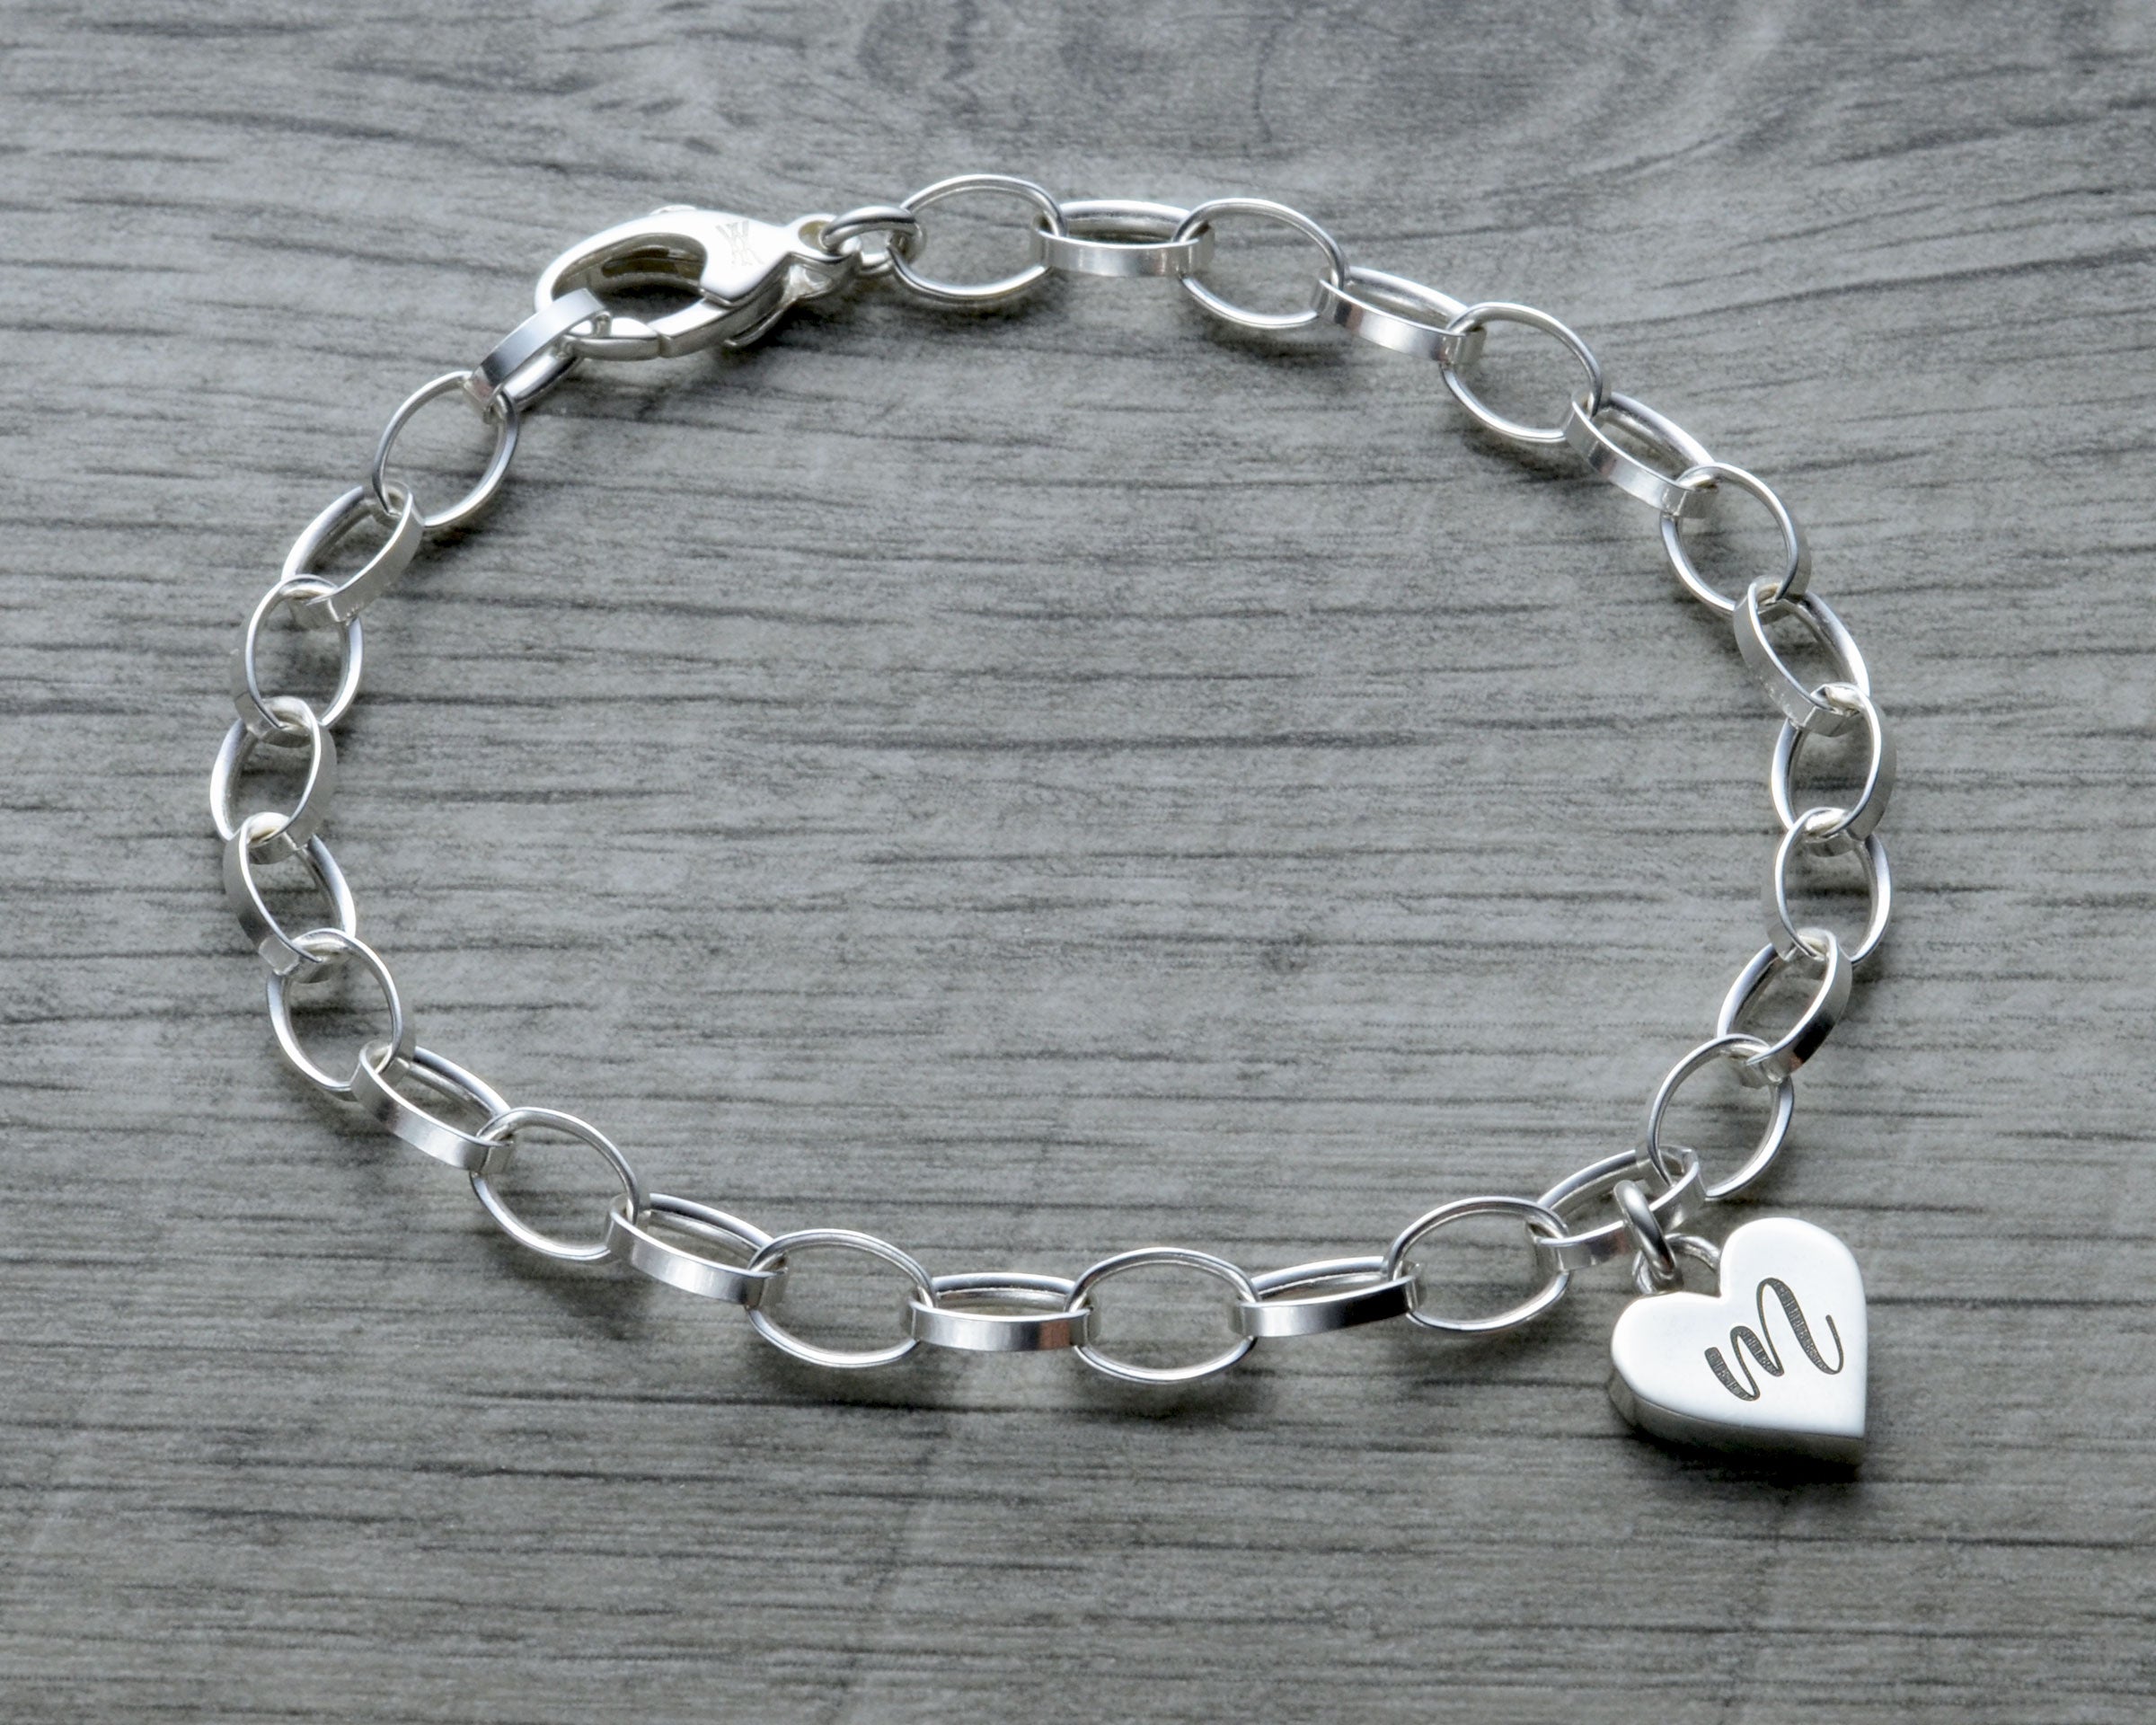 Buy Changeable Heart Charm Bracelet for USD 78.00 | James Avery | James  avery charm bracelet, Heart charm bracelet, Leather charm bracelets